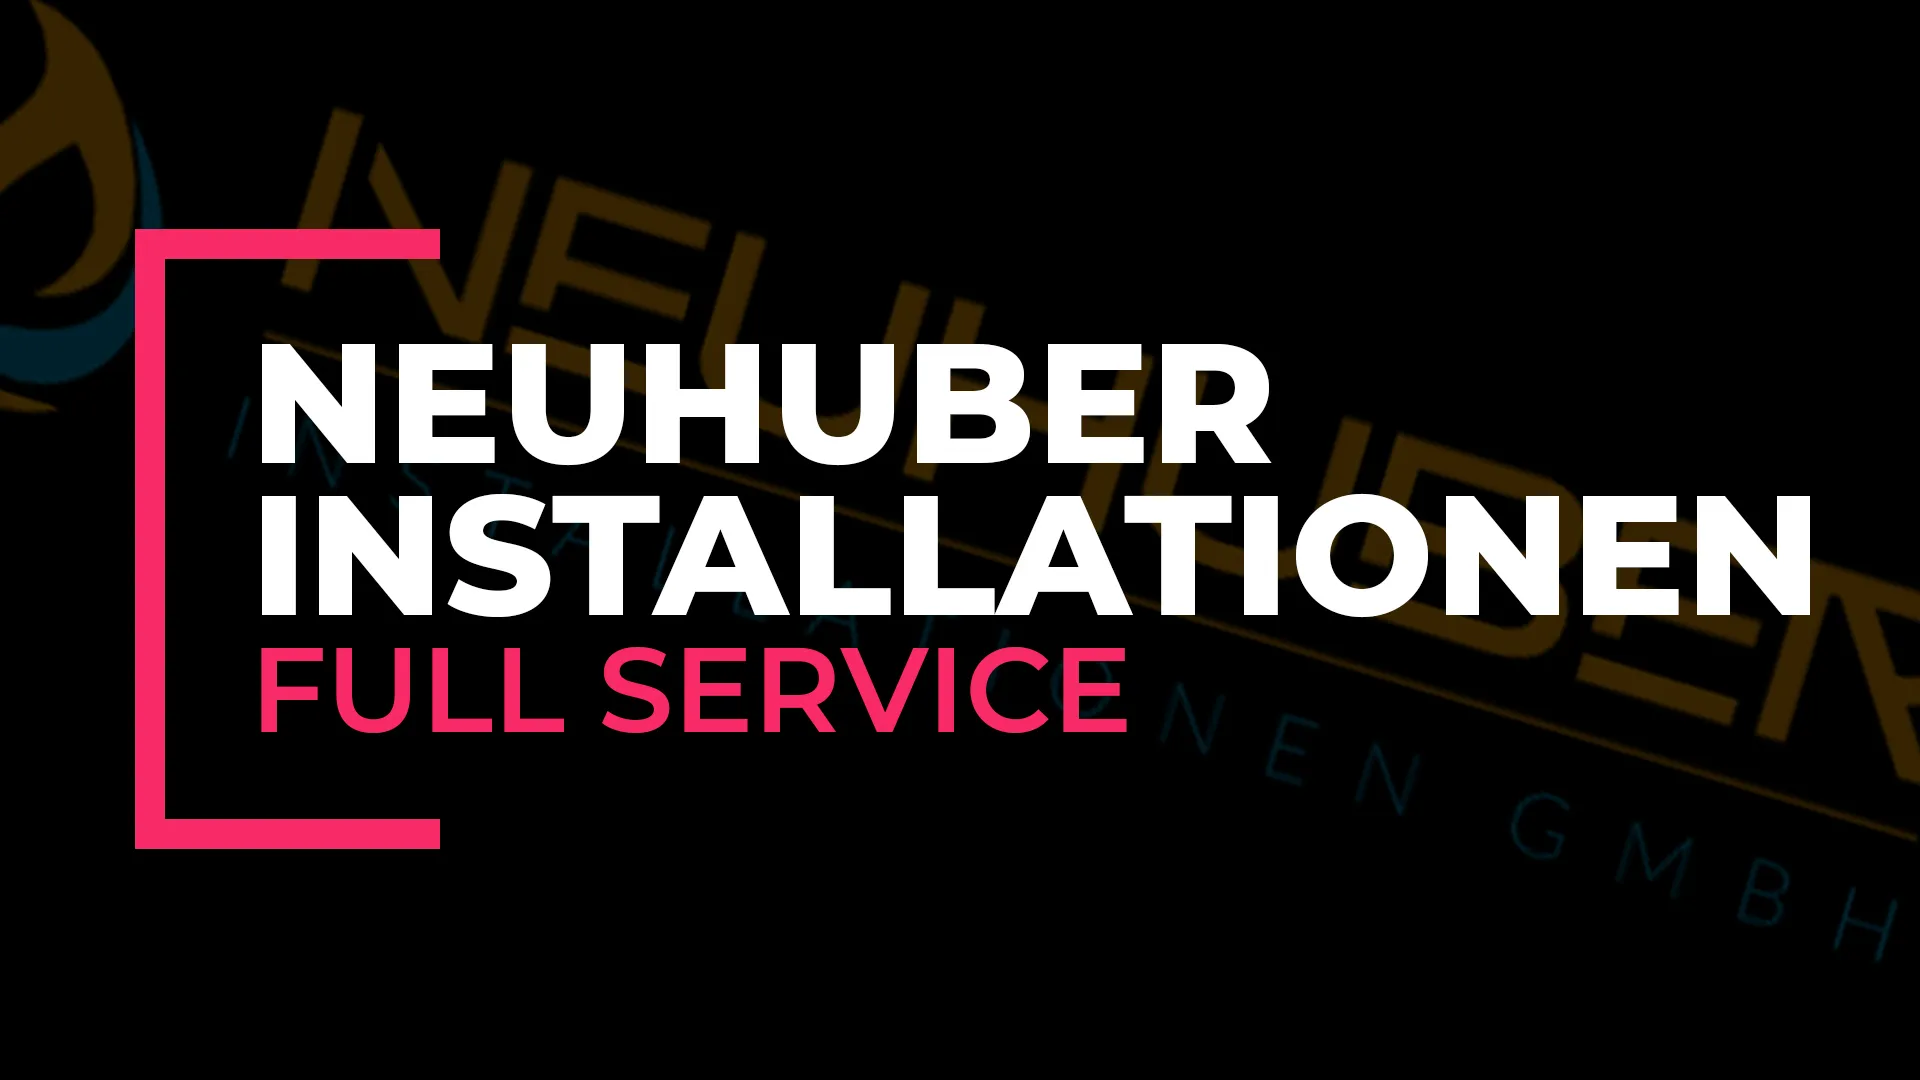 Full Service | Neuhuber Installationen